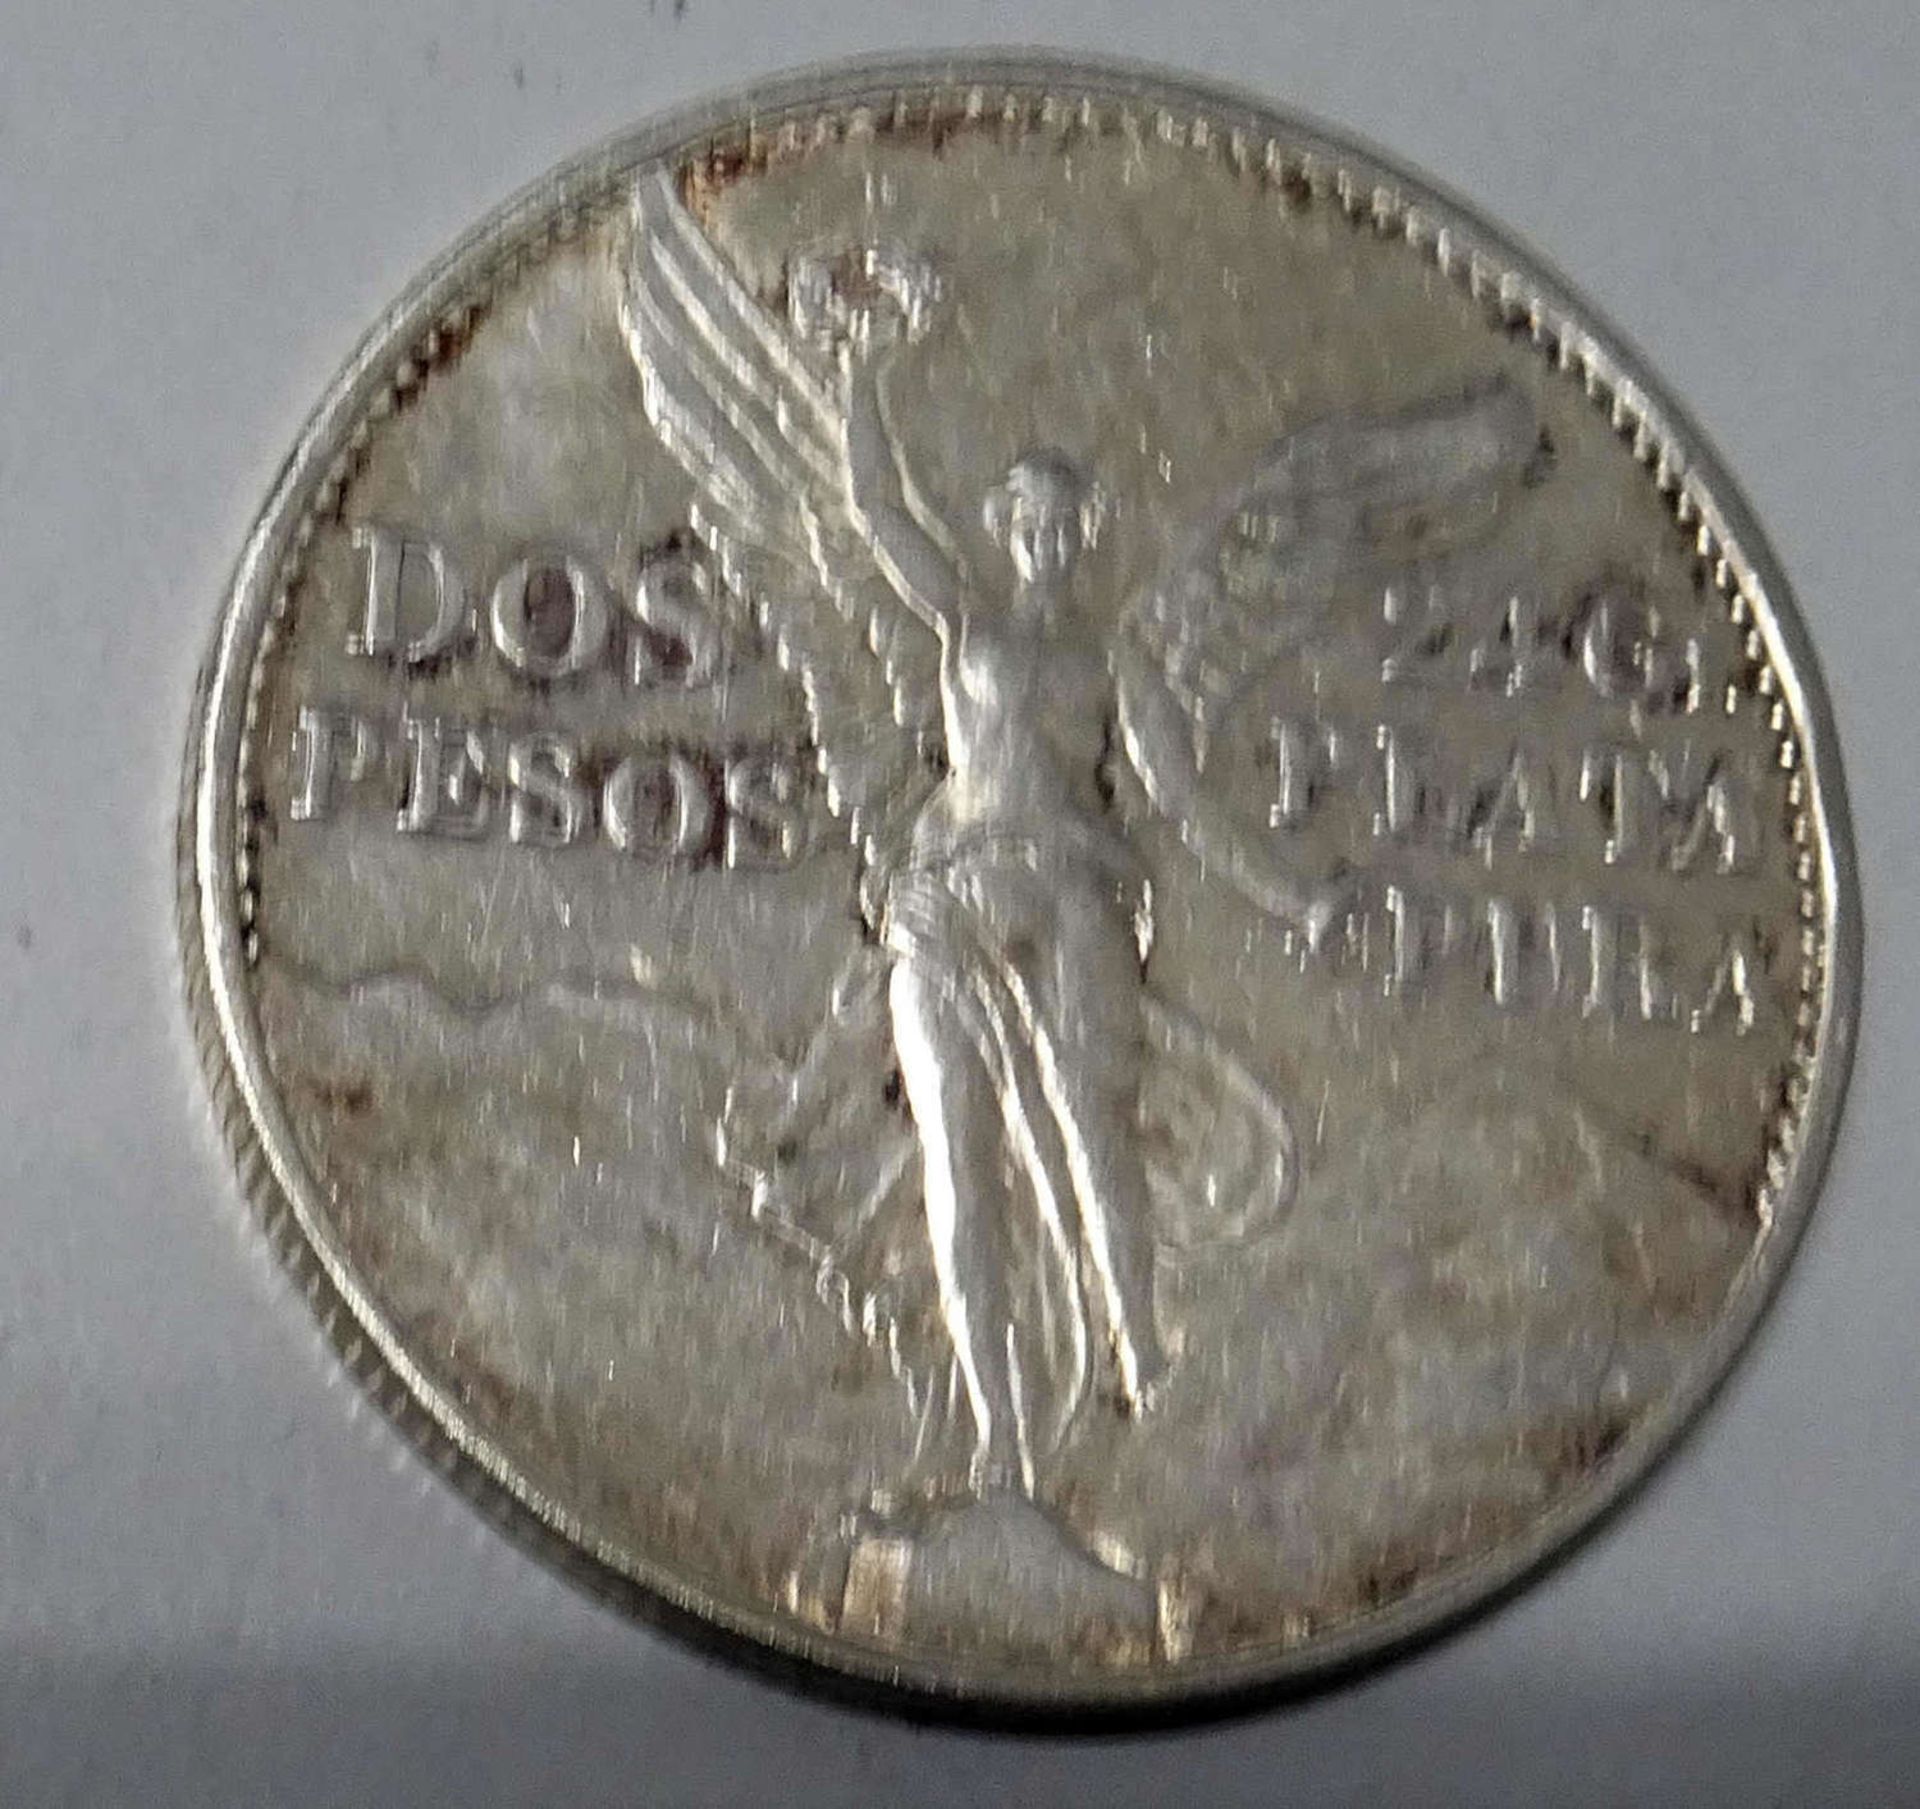 Mexico Silbermünze 1921, Dos Pesos, 24g Plata Pura. Katalog Nr. KM 20 / 462Mexico silver coin - Image 2 of 2